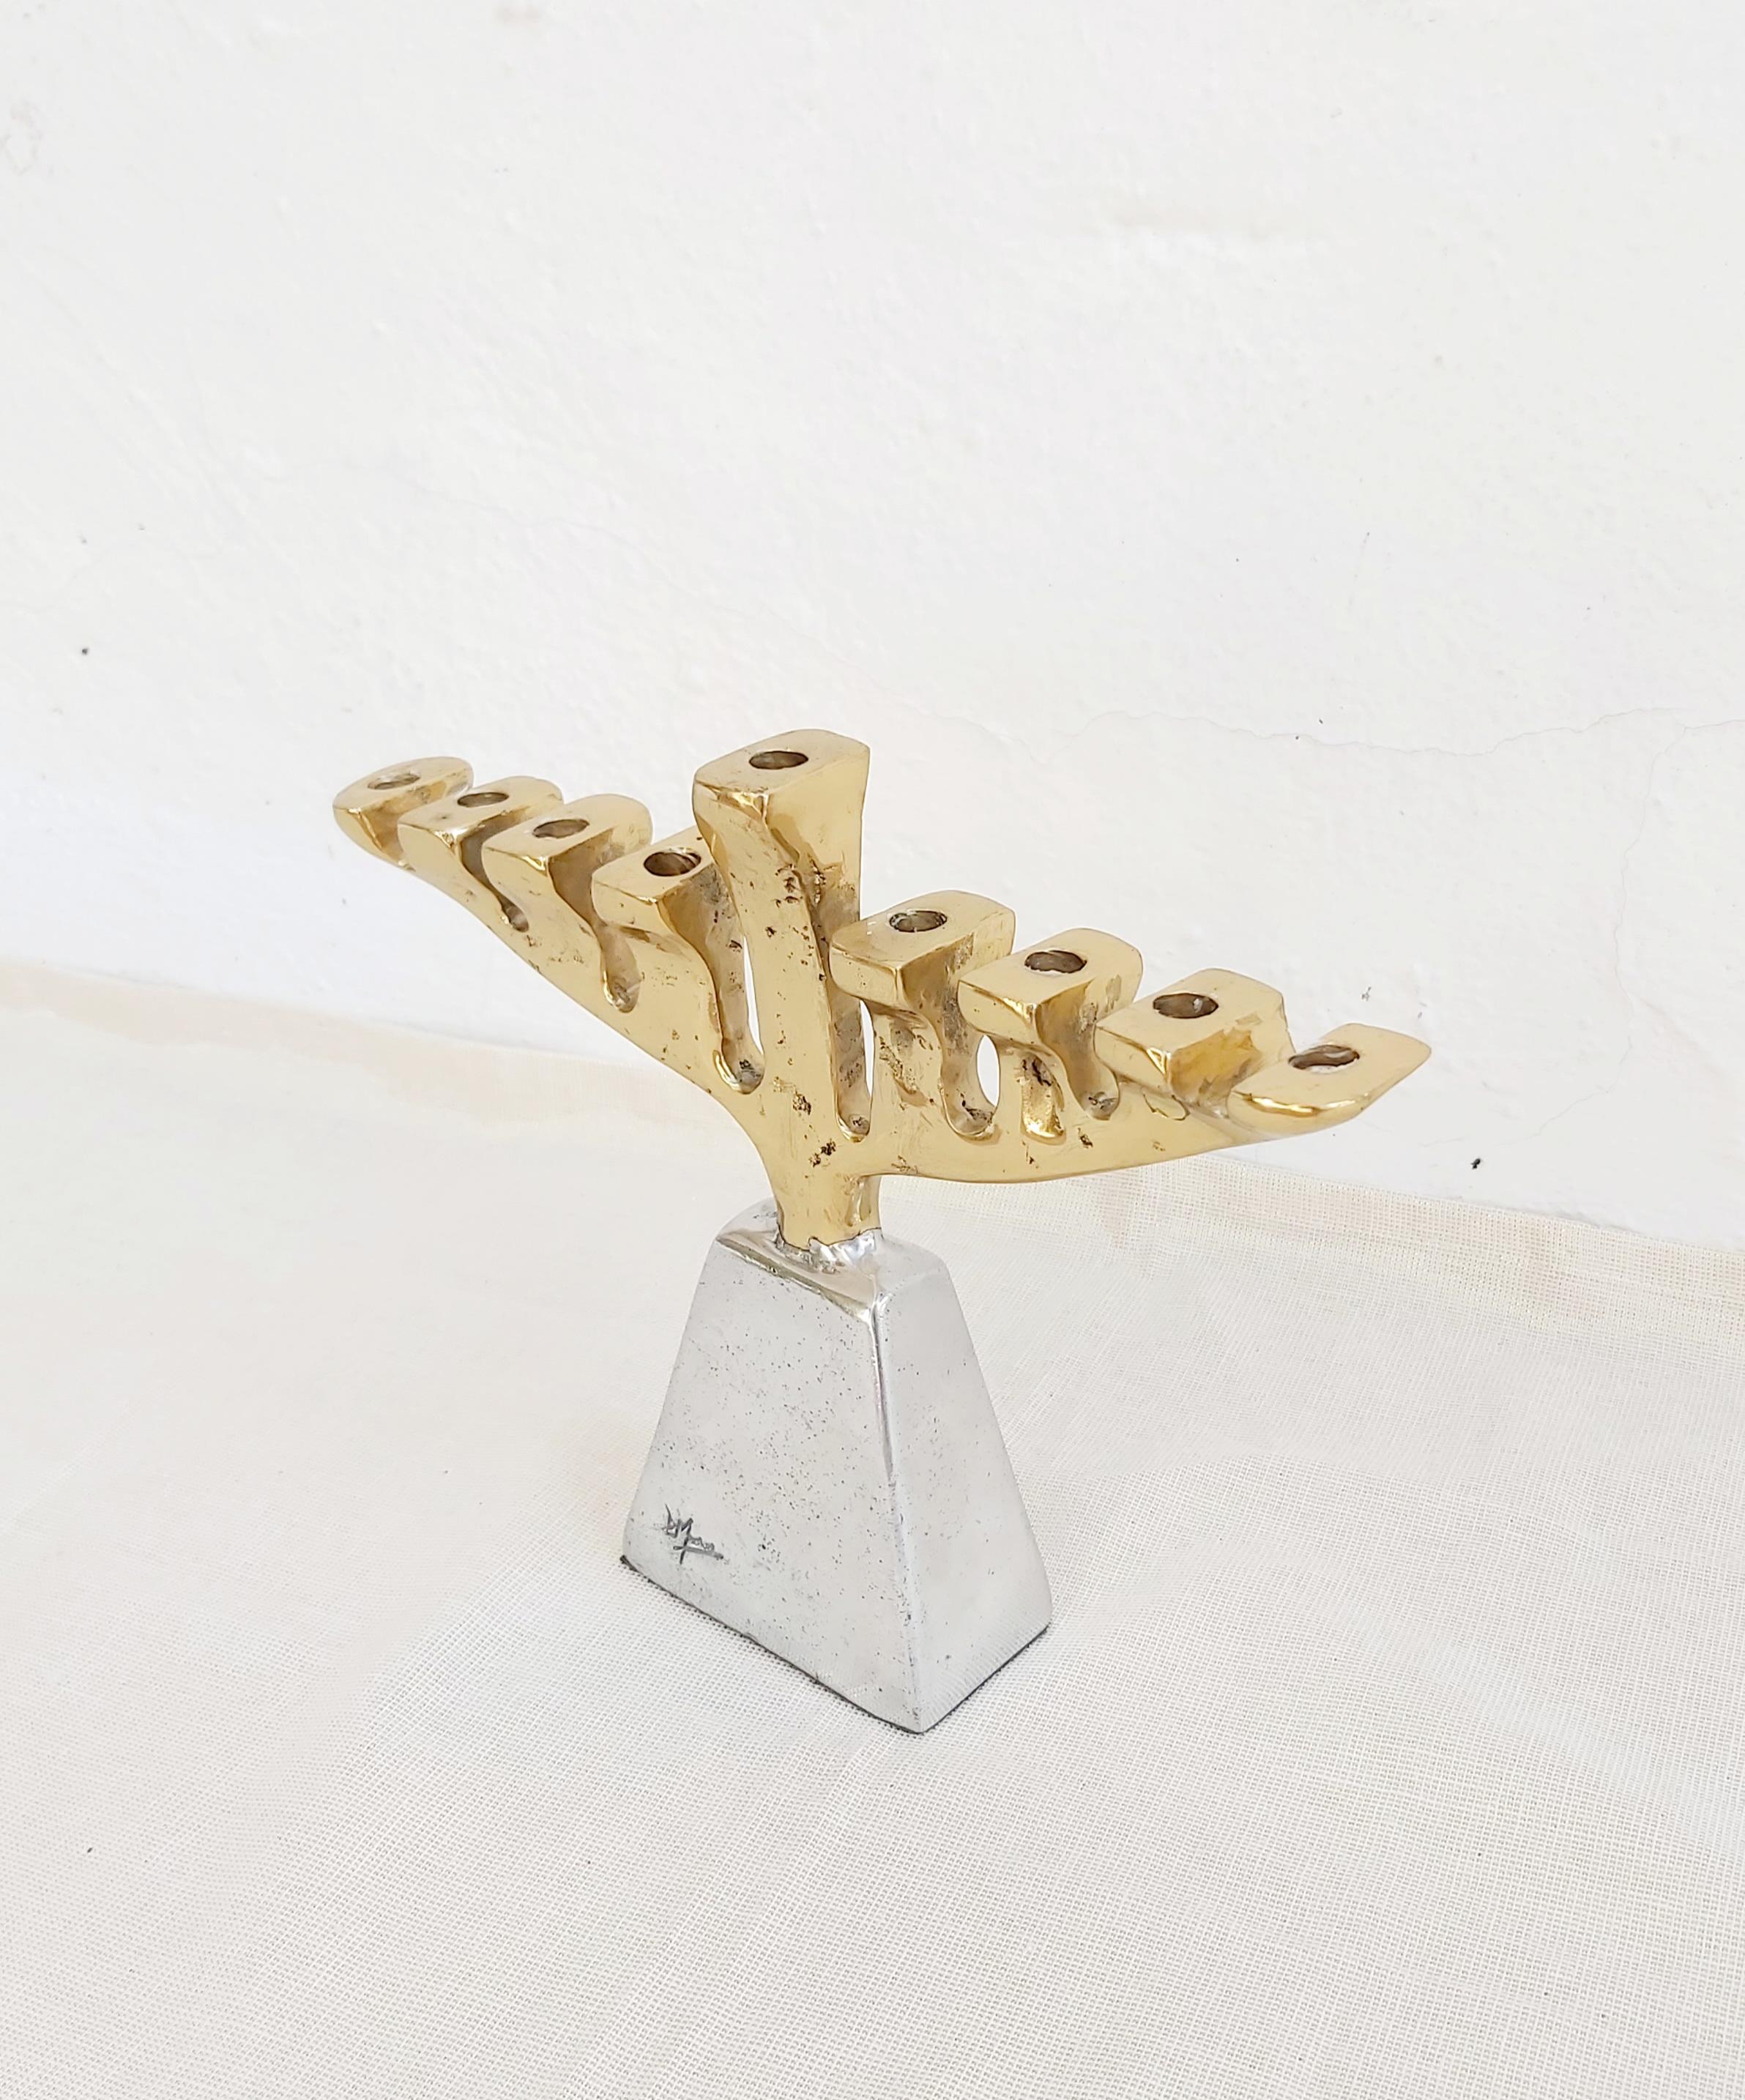 MENORAH  G046 created by DM in sand cast brass and aluminium, handmade - Abstract Art by David Marshall